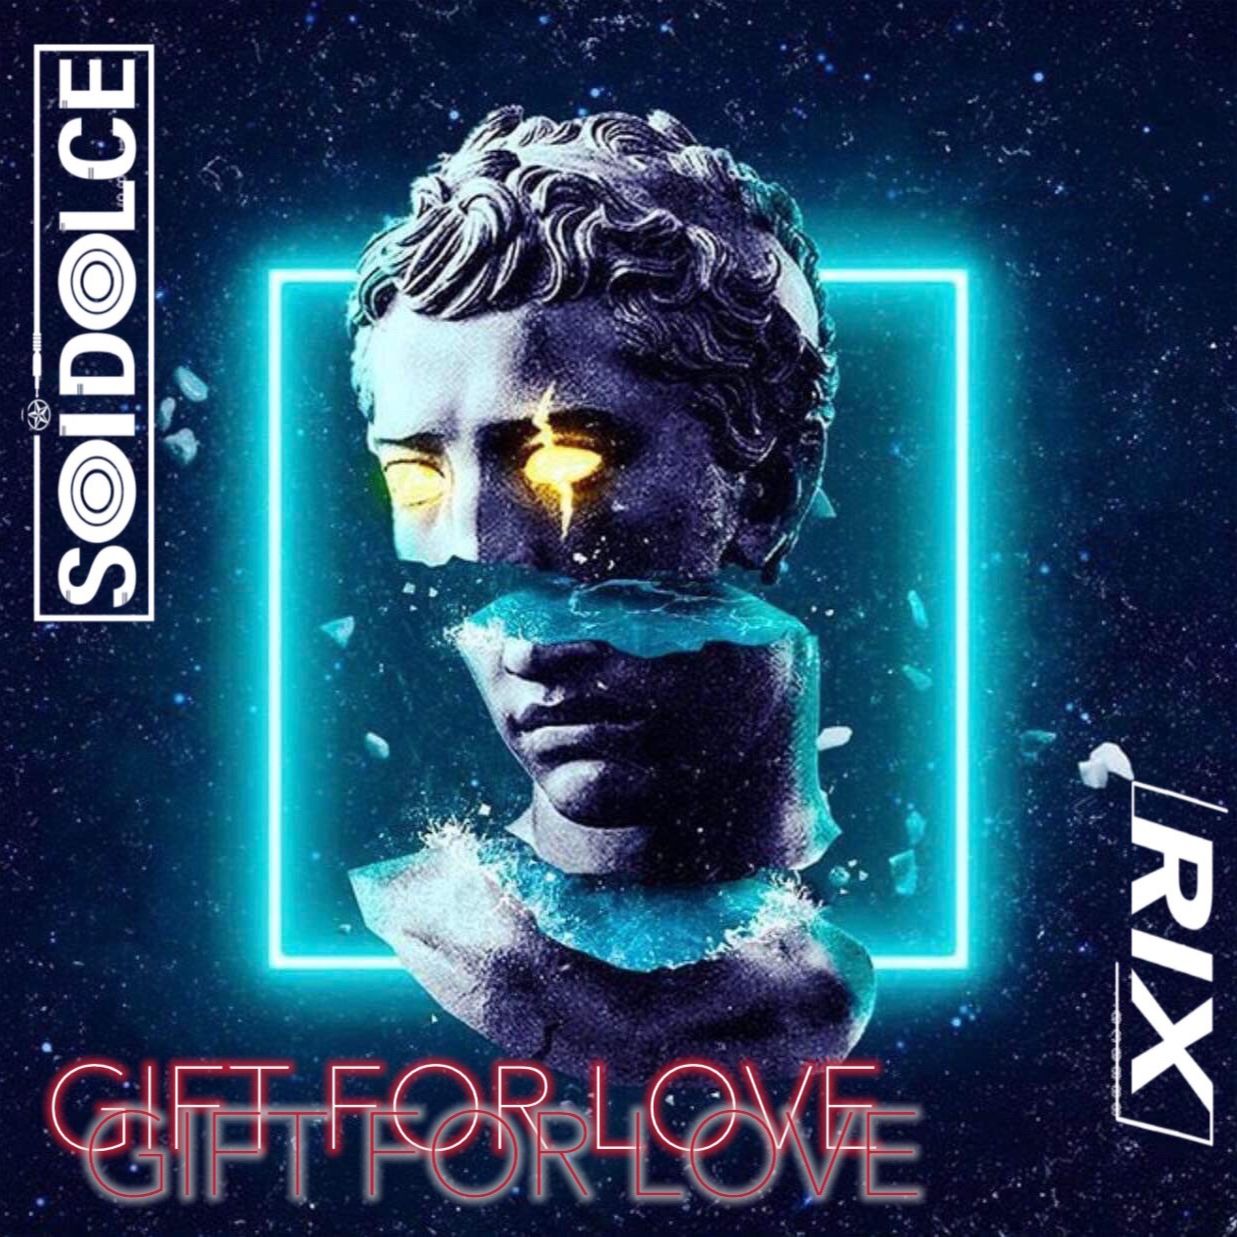 डाउनलोड करा GIFT FOR LOVE - SOI DOLCE x RIX